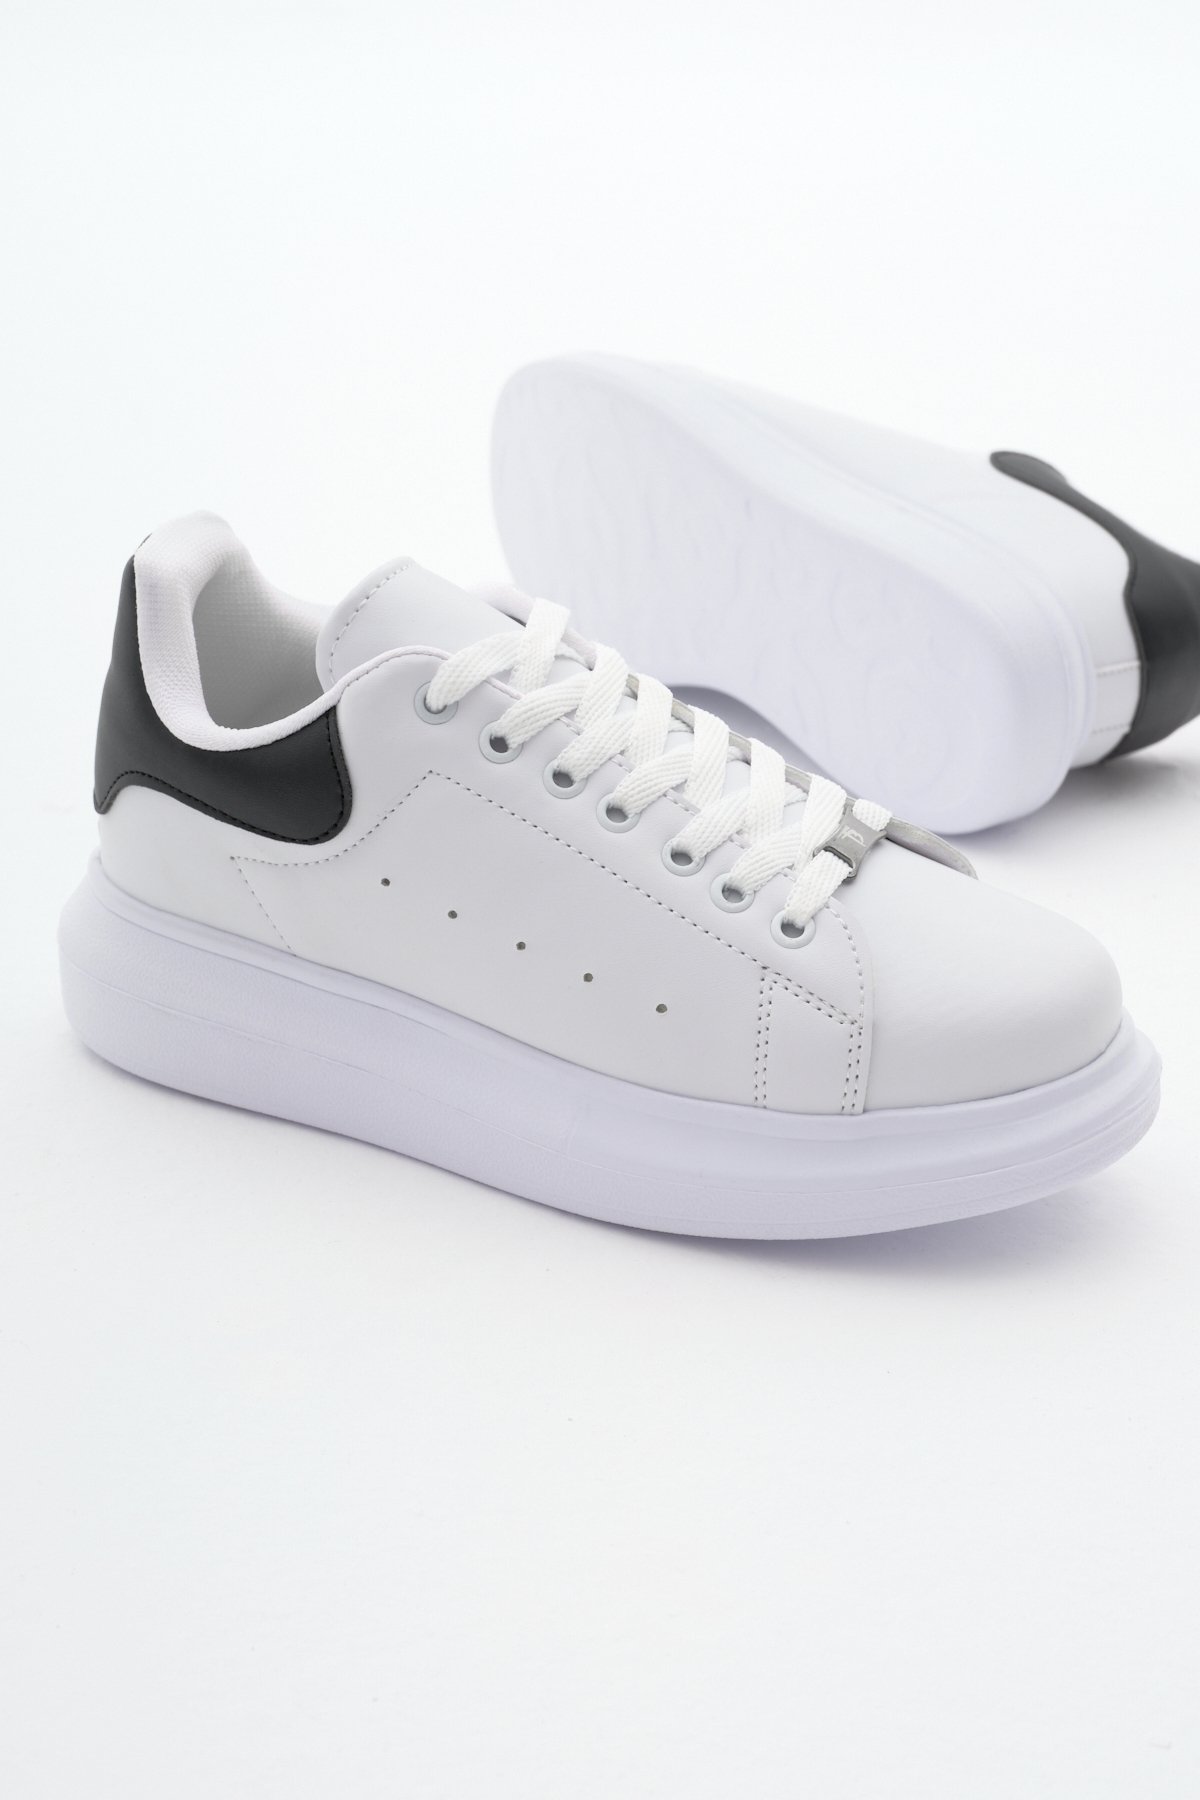 Tonny Black Unisex White Black Sneakers V2alx